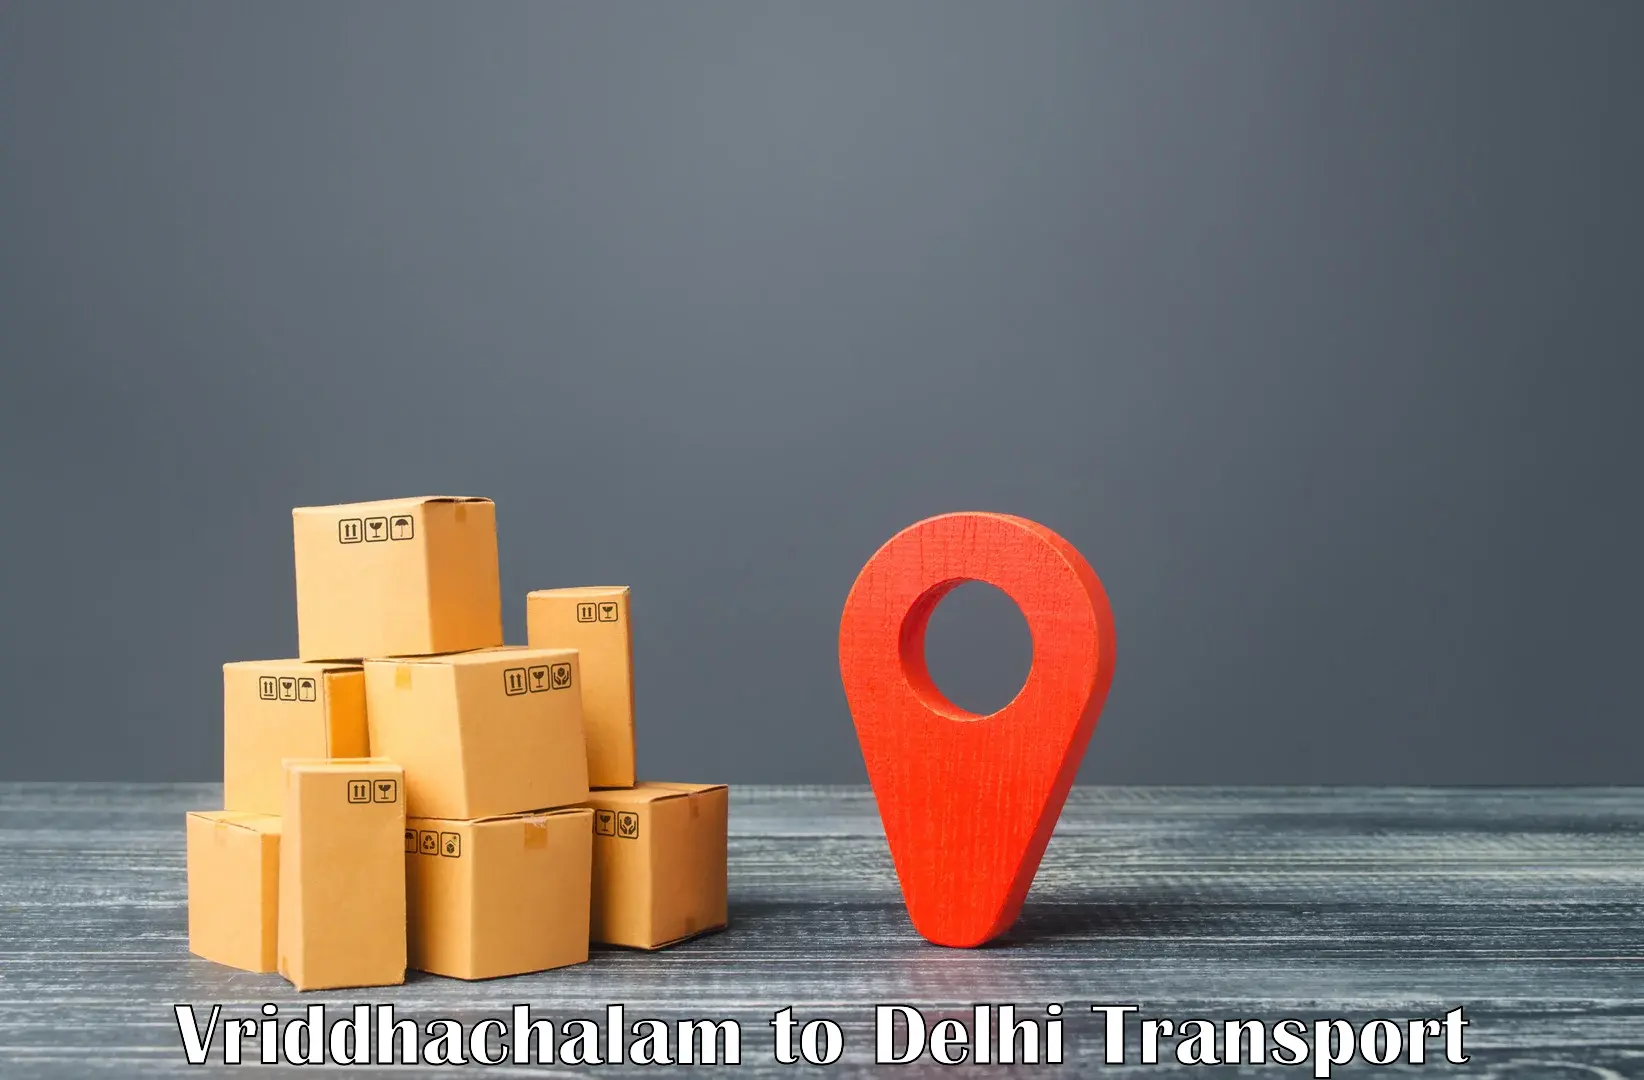 Online transport service Vriddhachalam to East Delhi